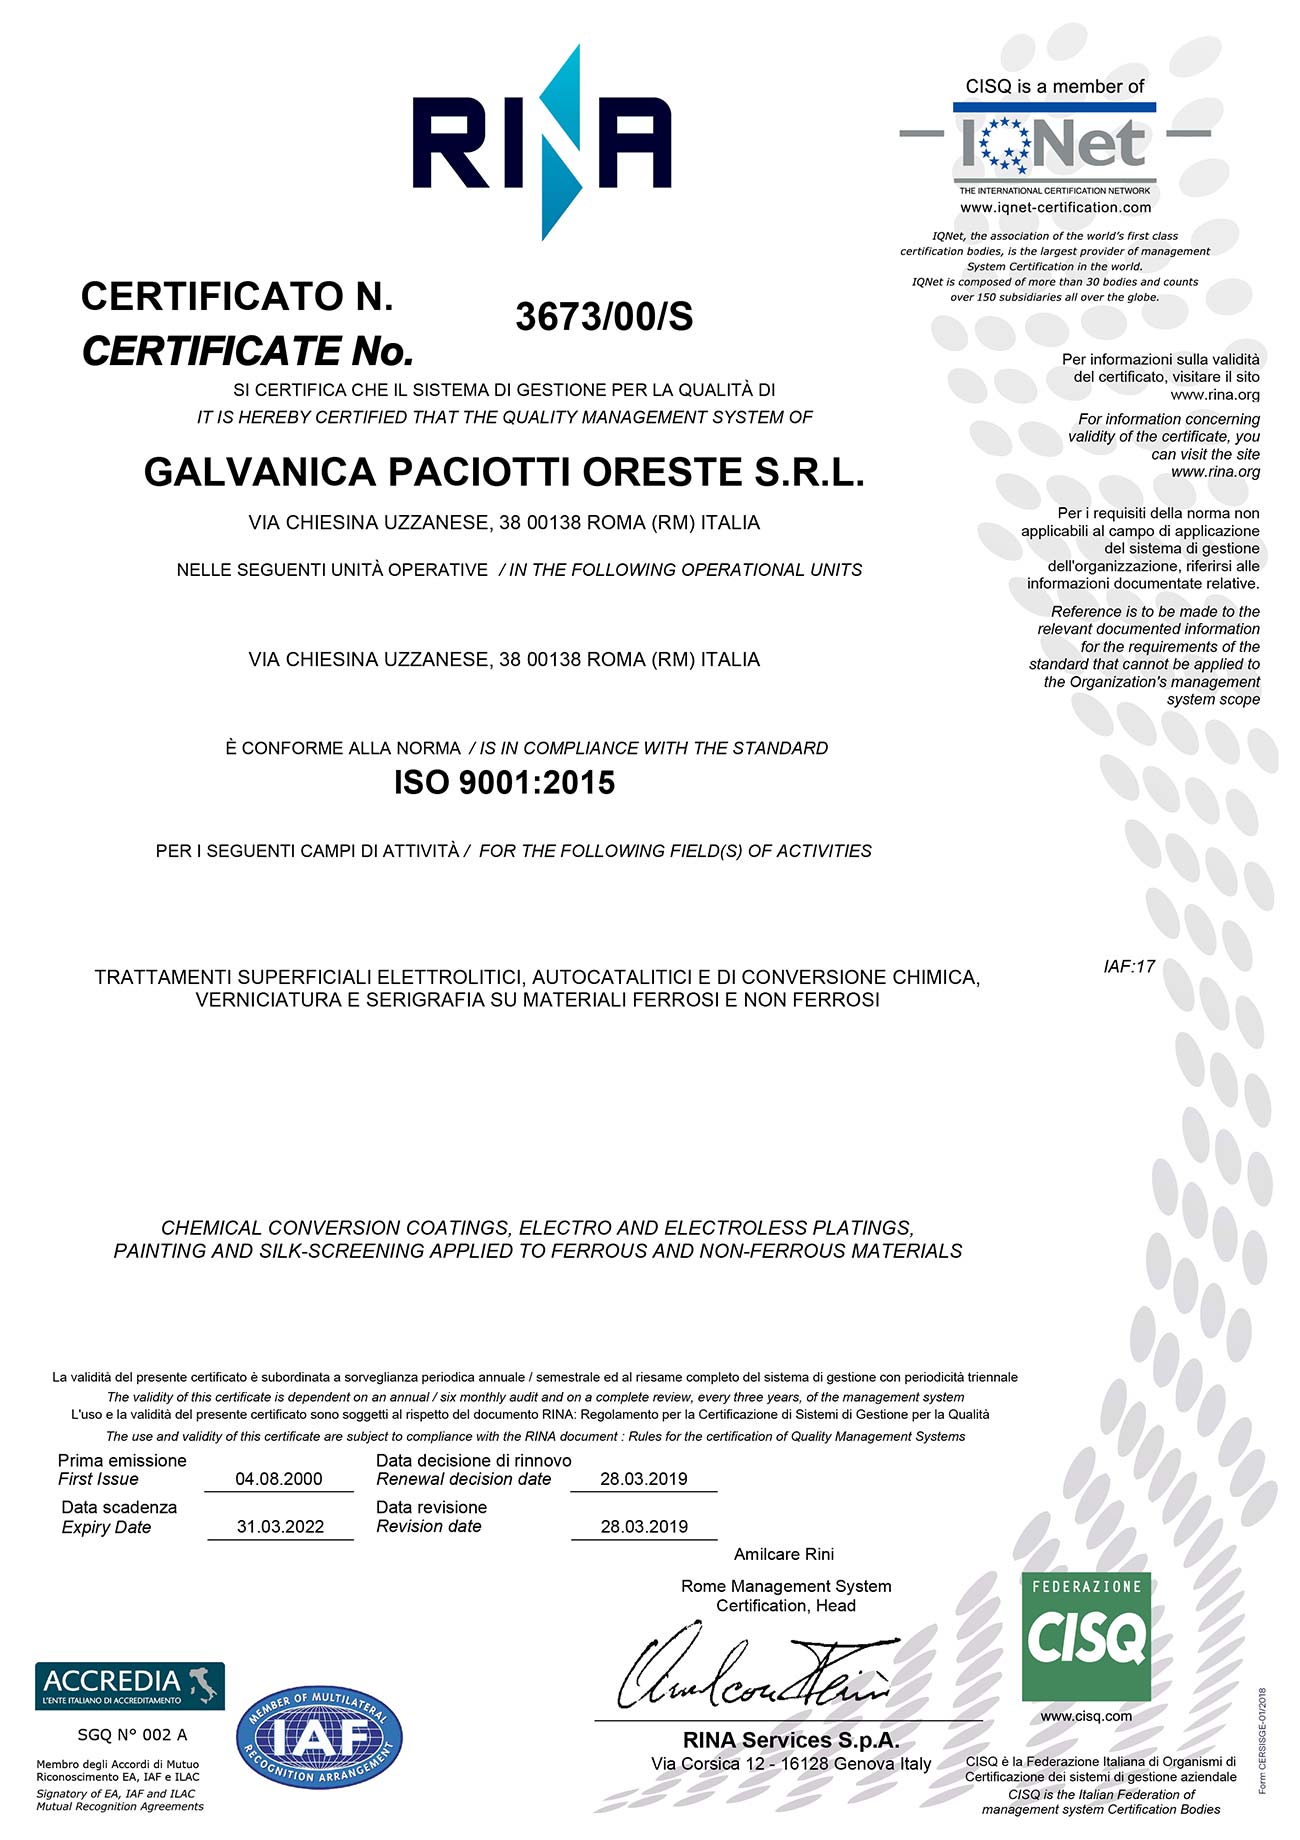 Certificate ISO 9001:2015 n. 3673/00/S Galvanica Paciotti